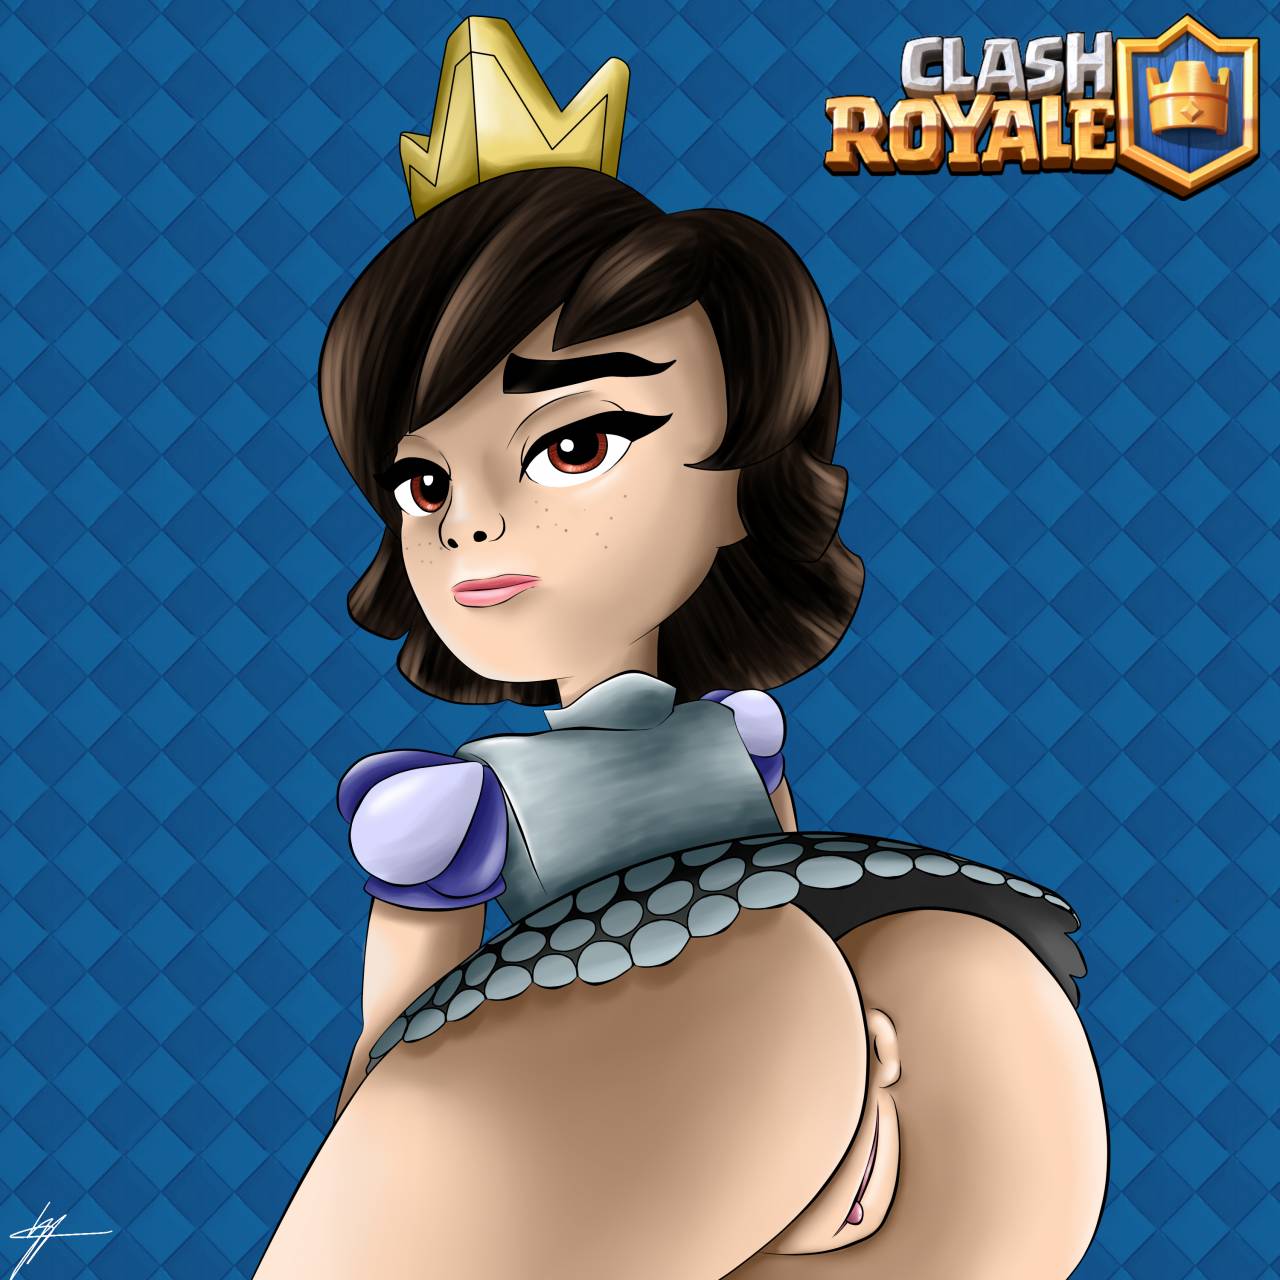 Clash royale princess naked